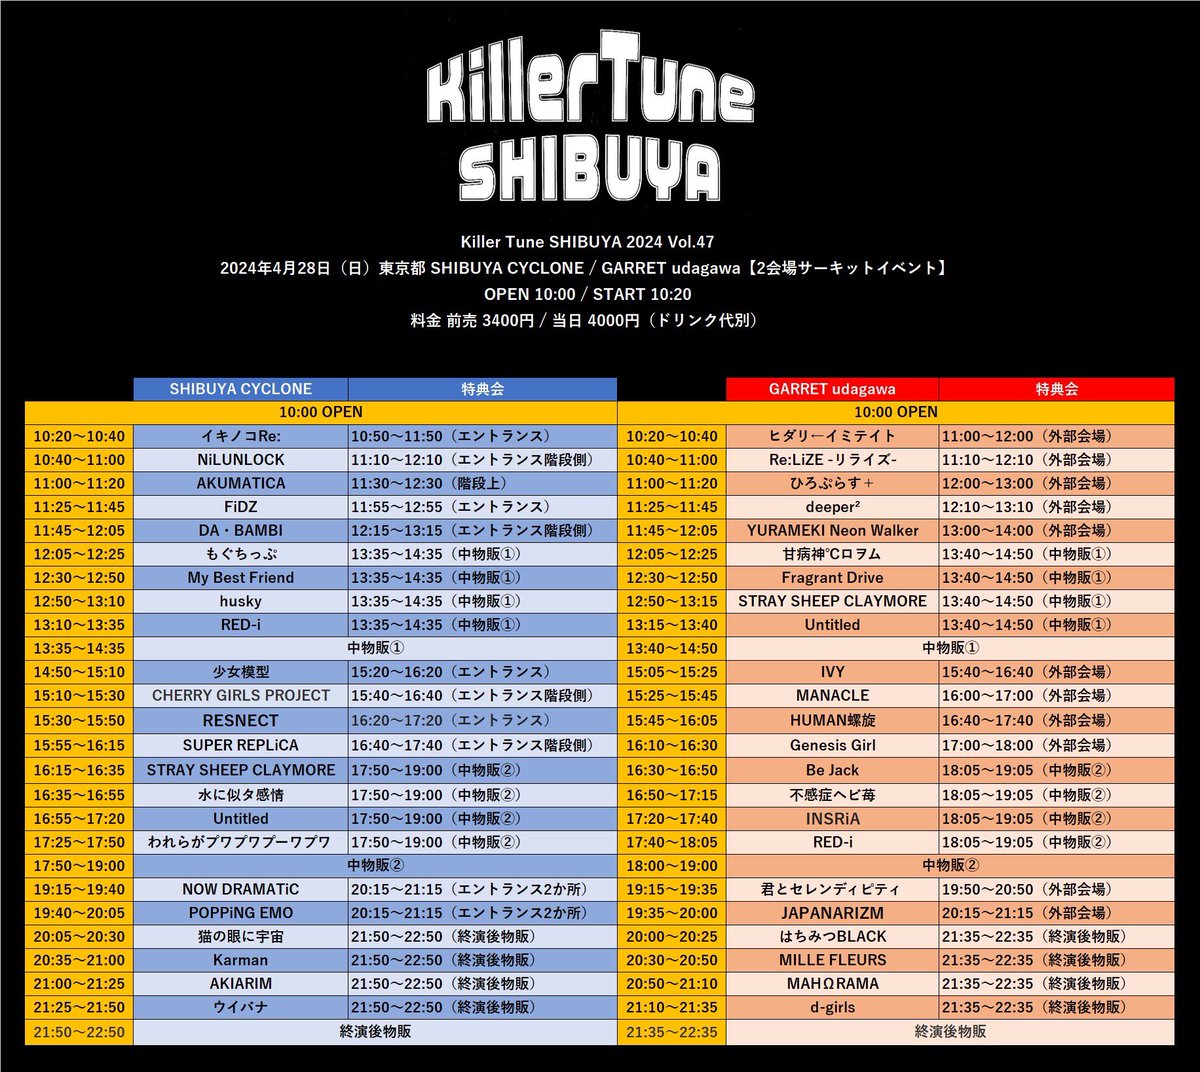 #AKIARIMスケジュール 4/28(日)@渋谷CYCLONE Killer Tune SHIBUYA 2024 Vol.46 【2会場サーキットイベント】 🎤21:00-21:25 📸21:50-22:50 t.livepocket.jp/e/iqtng ⫘⫘⫘⫘⫘⫘⫘⫘⫘⫘⫘⫘⫘⫘⫘⫘ 【スケジュールリンク】 akiarim.com/schedule/